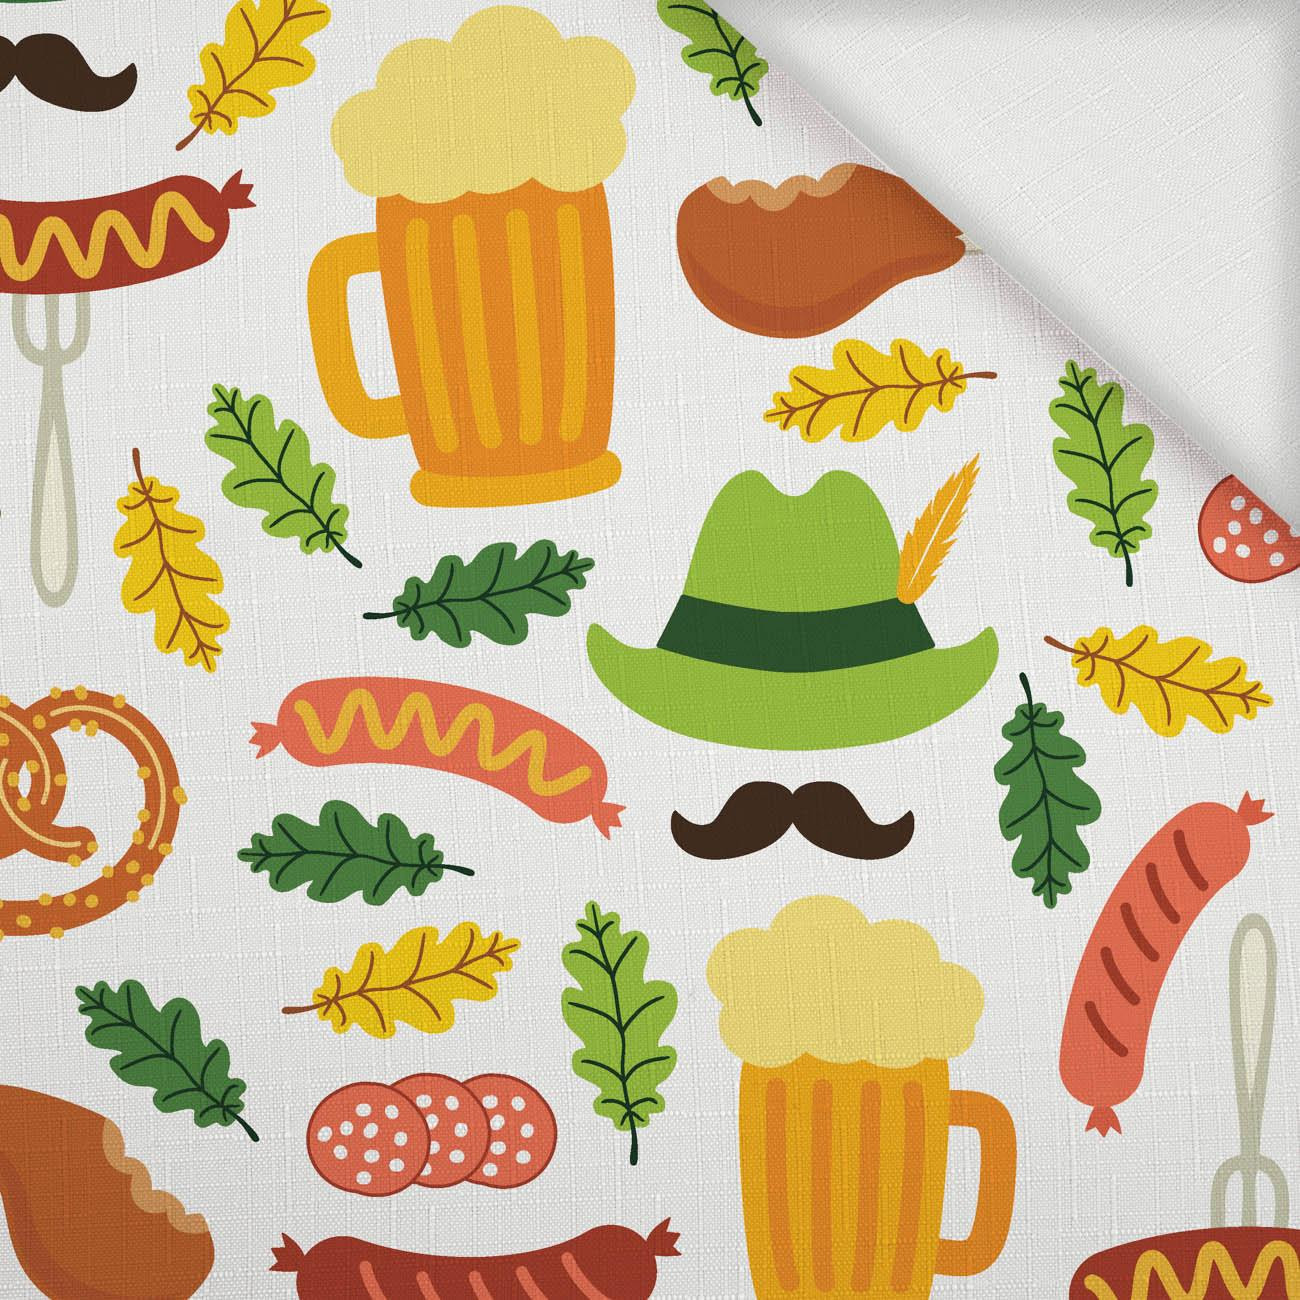 OKTOBERFEST MIX - Woven Fabric for tablecloths